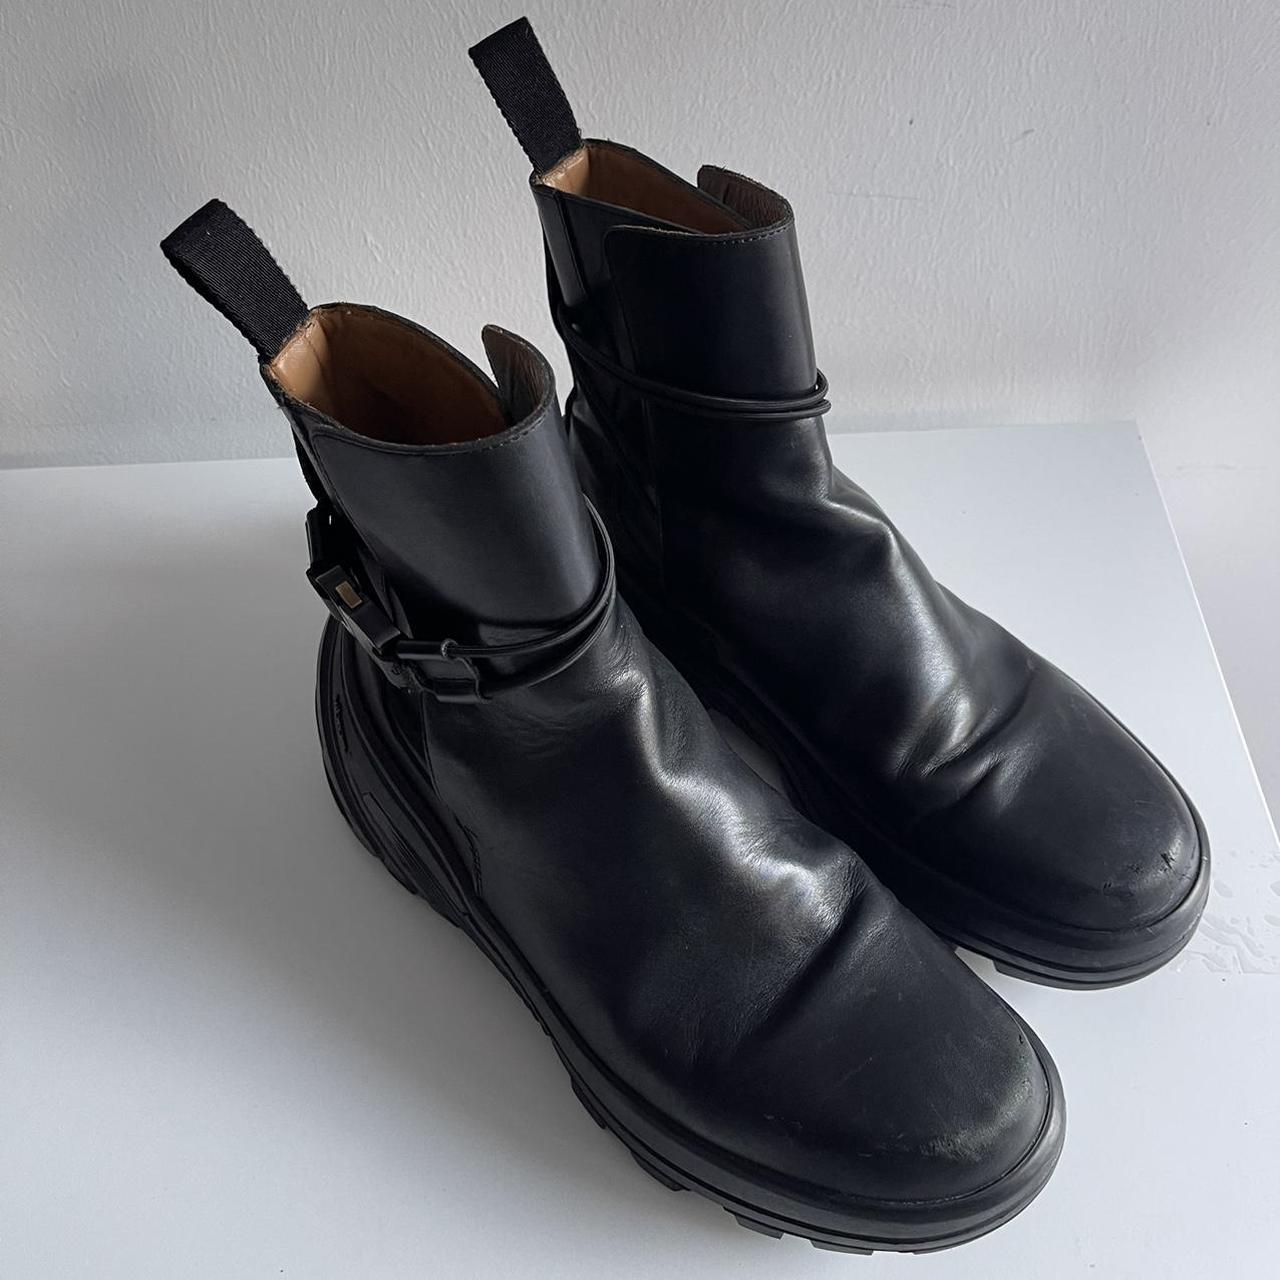 Alyx 1017 9SM vibrant boots black - sick pair with... - Depop